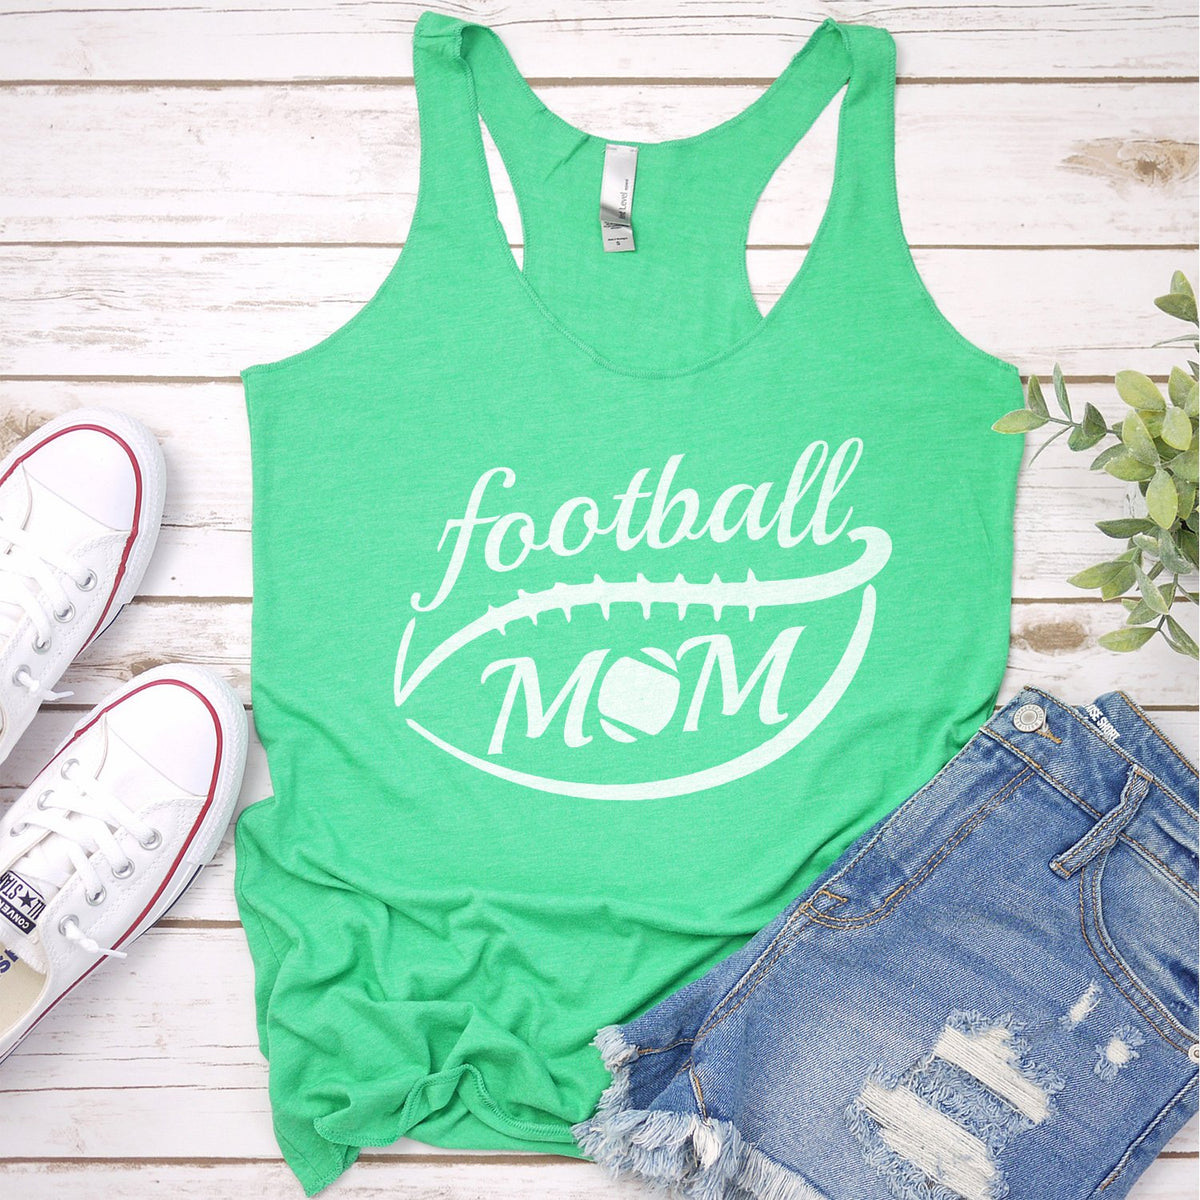 Football Mom - Tank Top Racerback